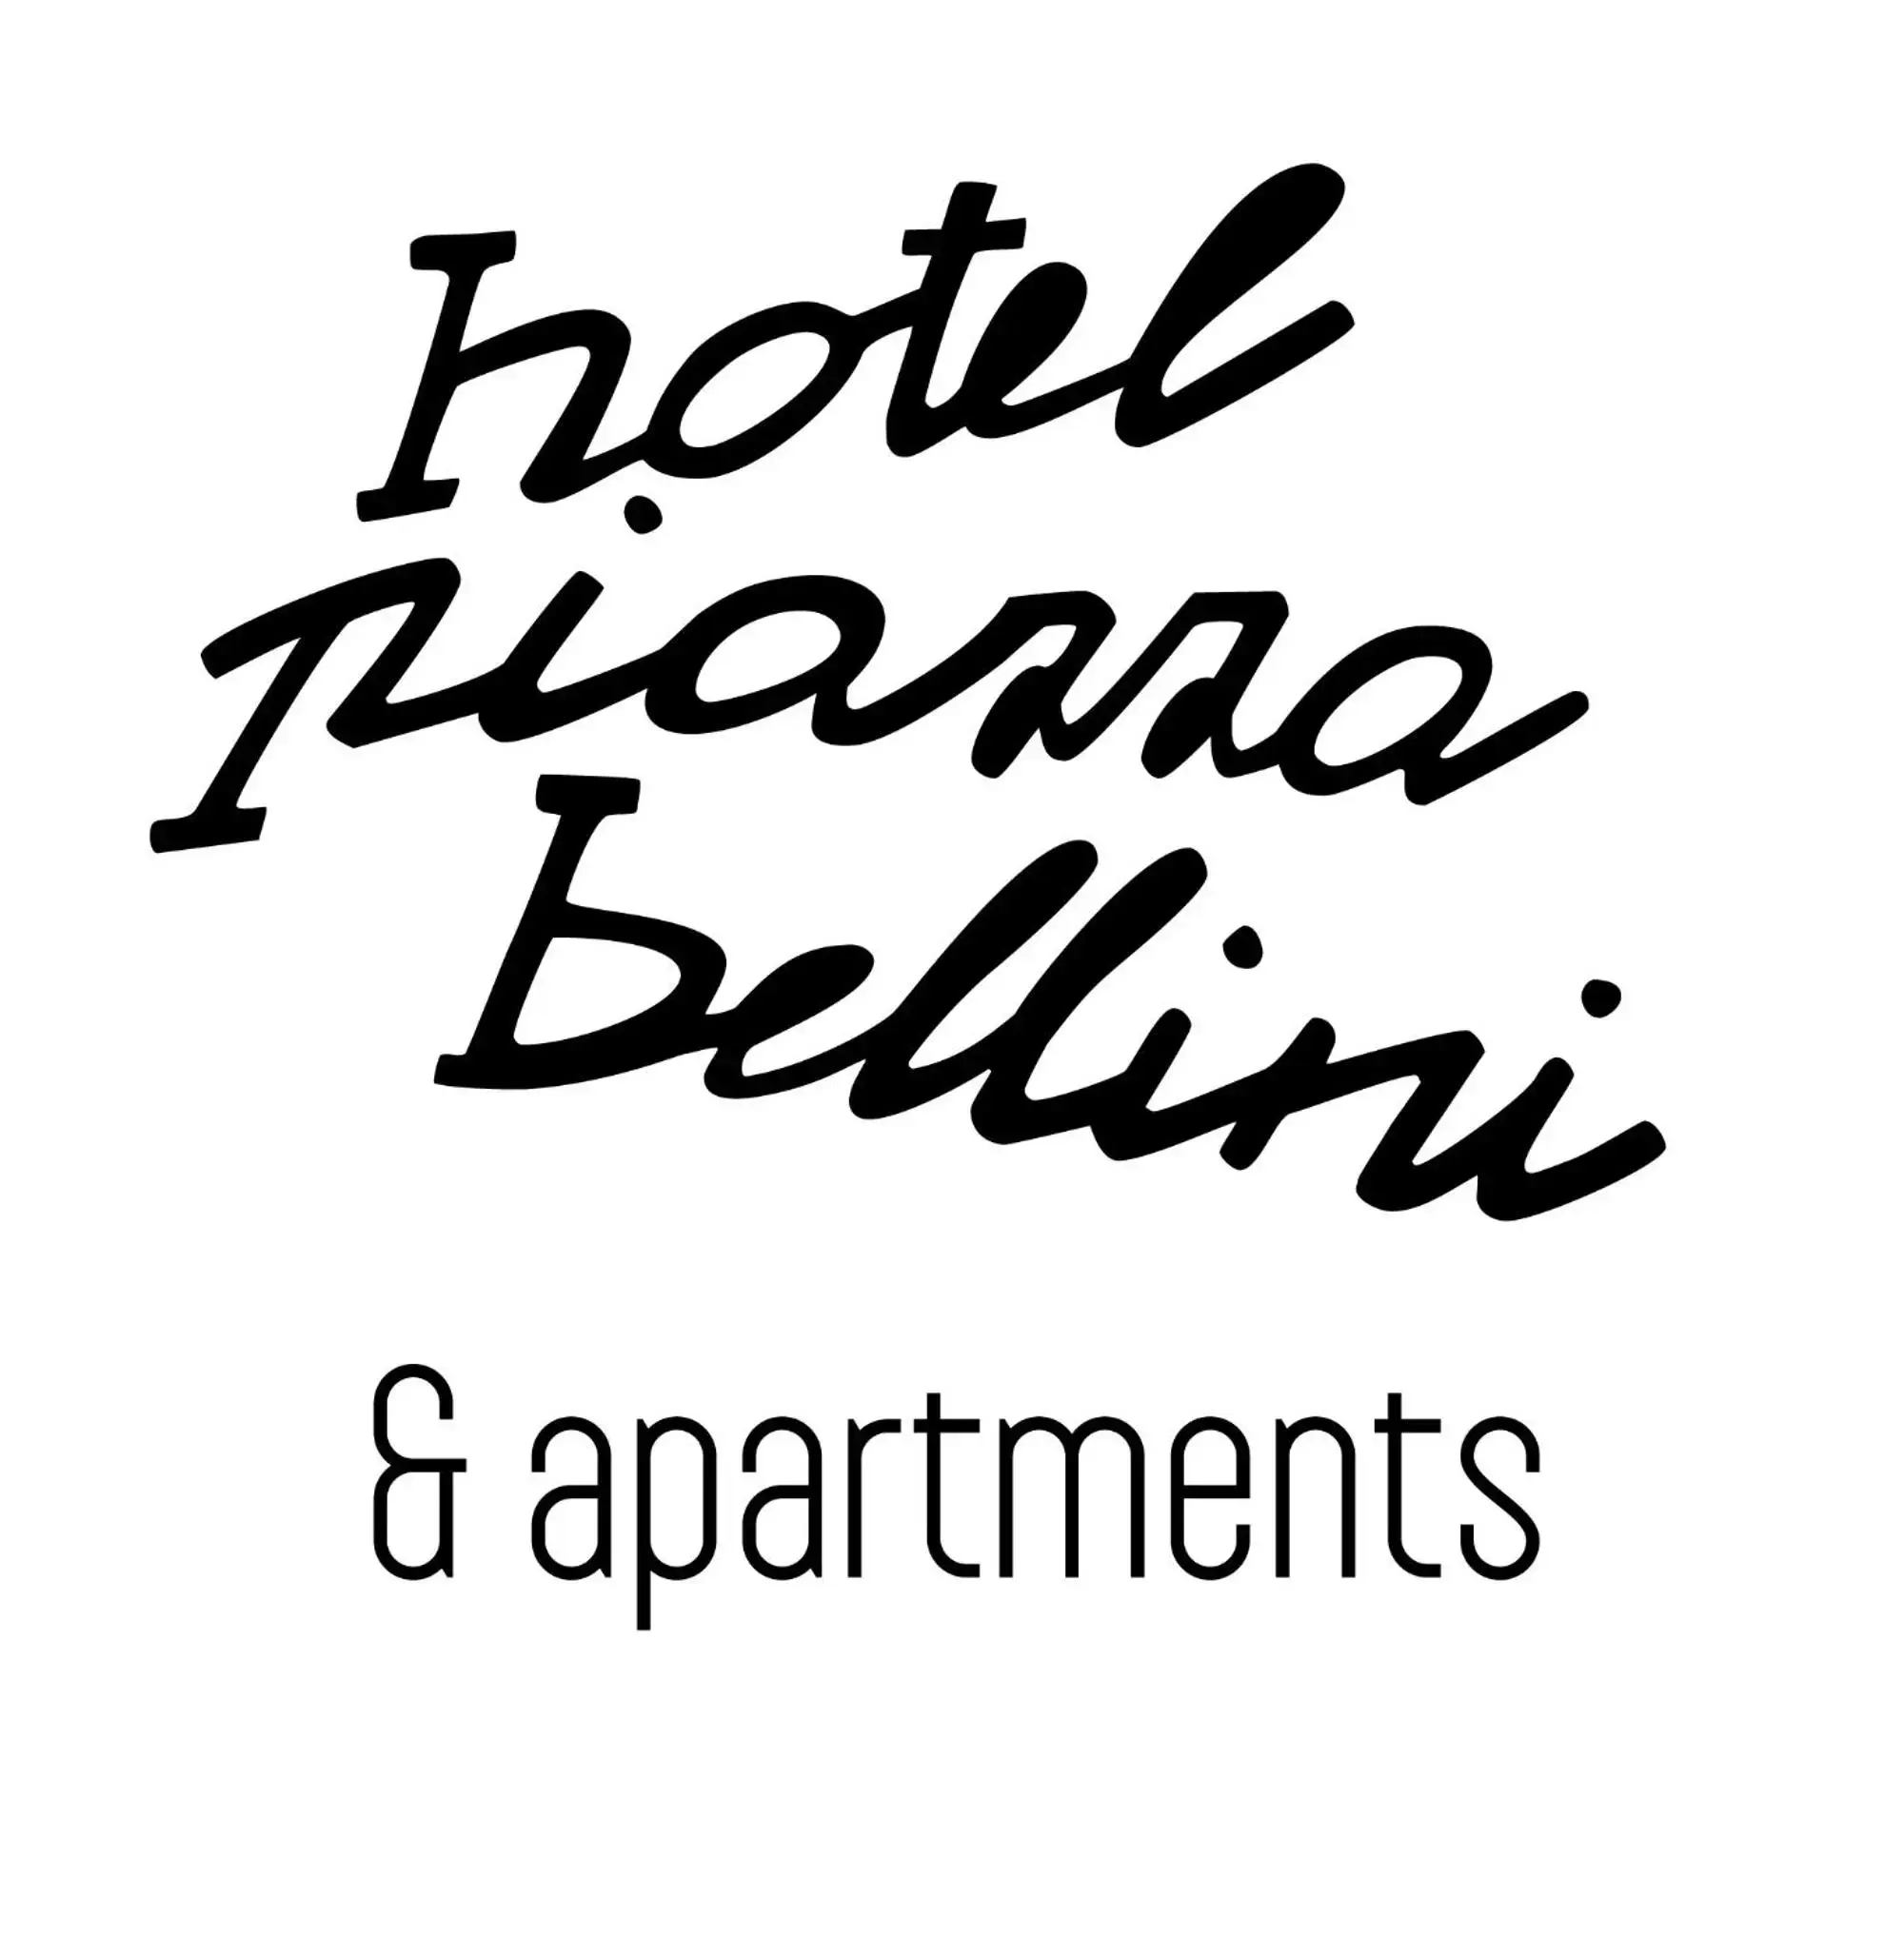 Logo/Certificate/Sign in Hotel Piazza Bellini & Apartments